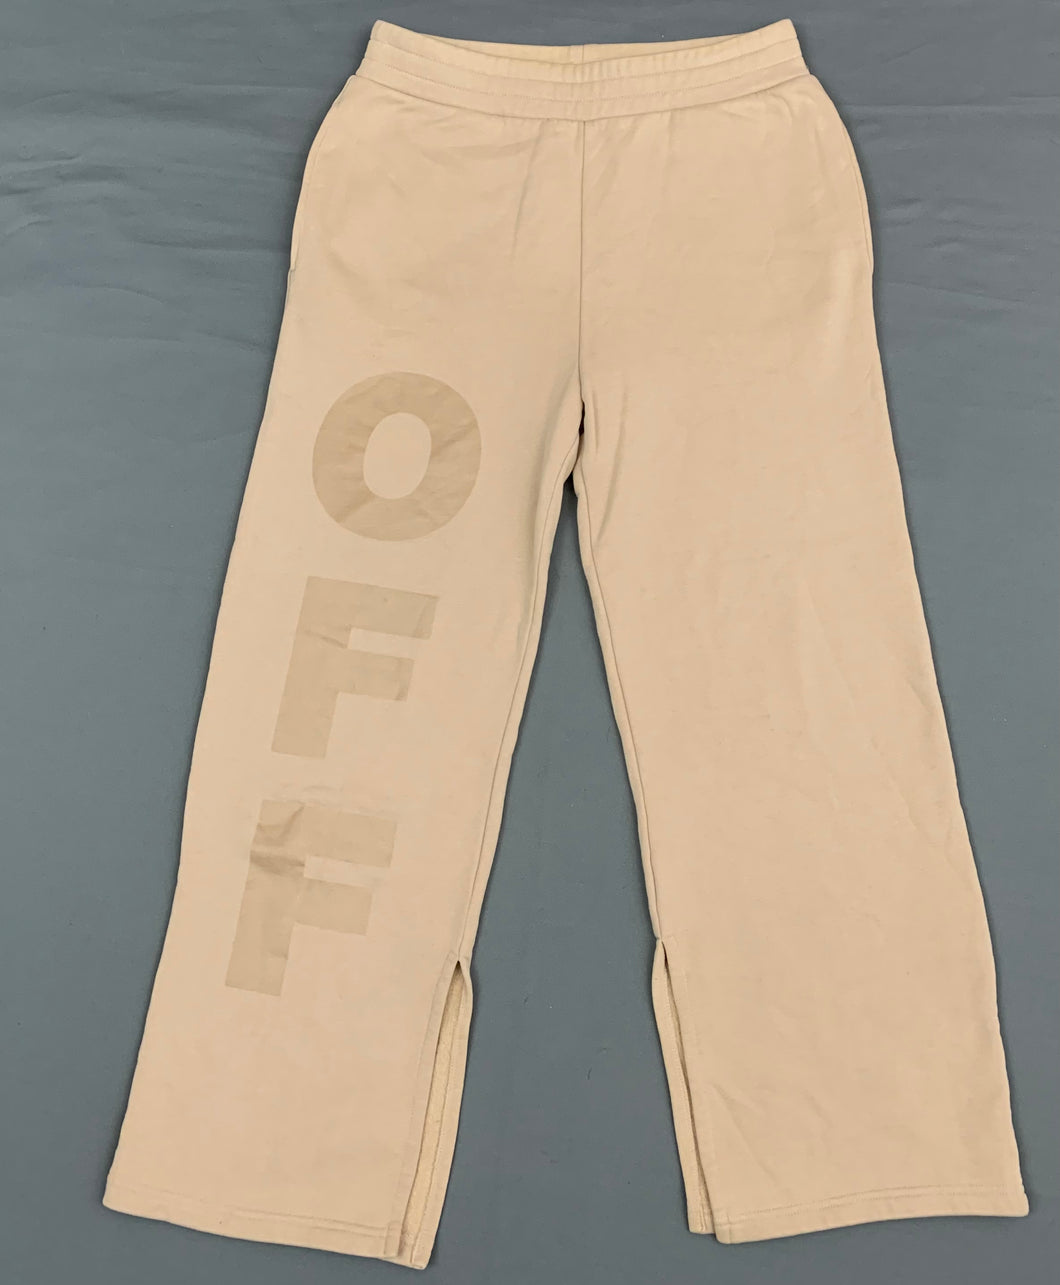 OFF-WHITE c/o VIRGIL ABLOH SWEAT PANTS / TRACKSUIT BOTTOMS / TROUSERS - Womens Size Medium M